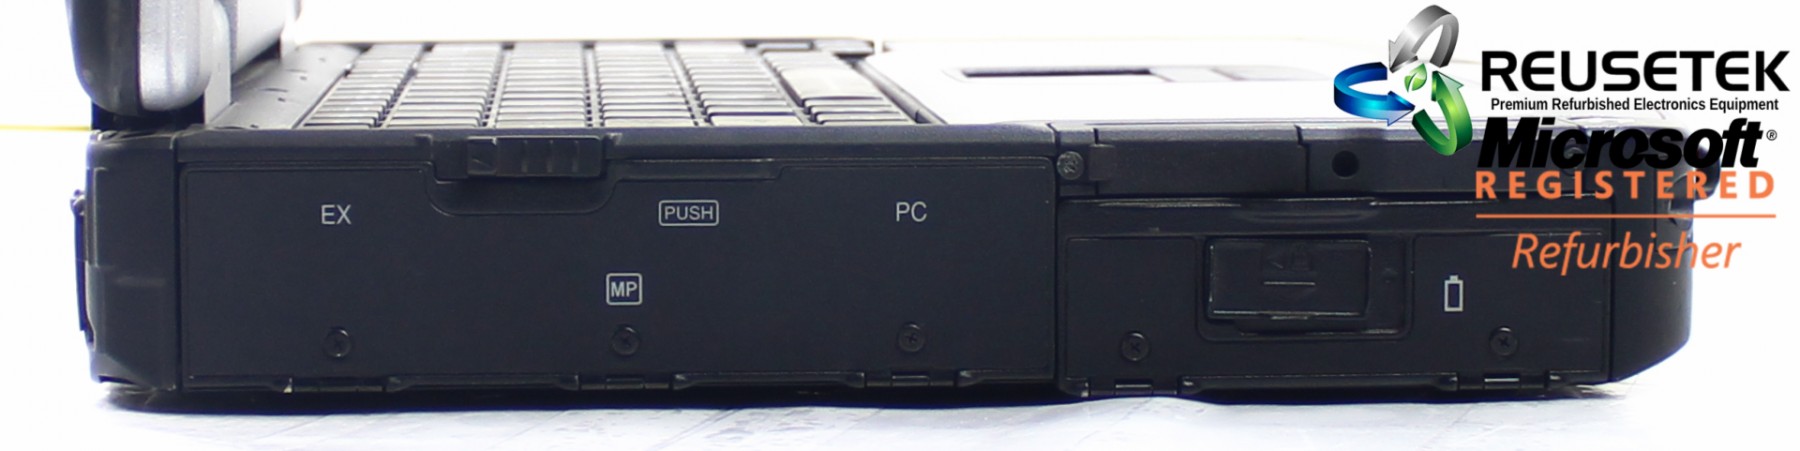 500031488-Panasonic Toughbook CF-30 Laptop-image